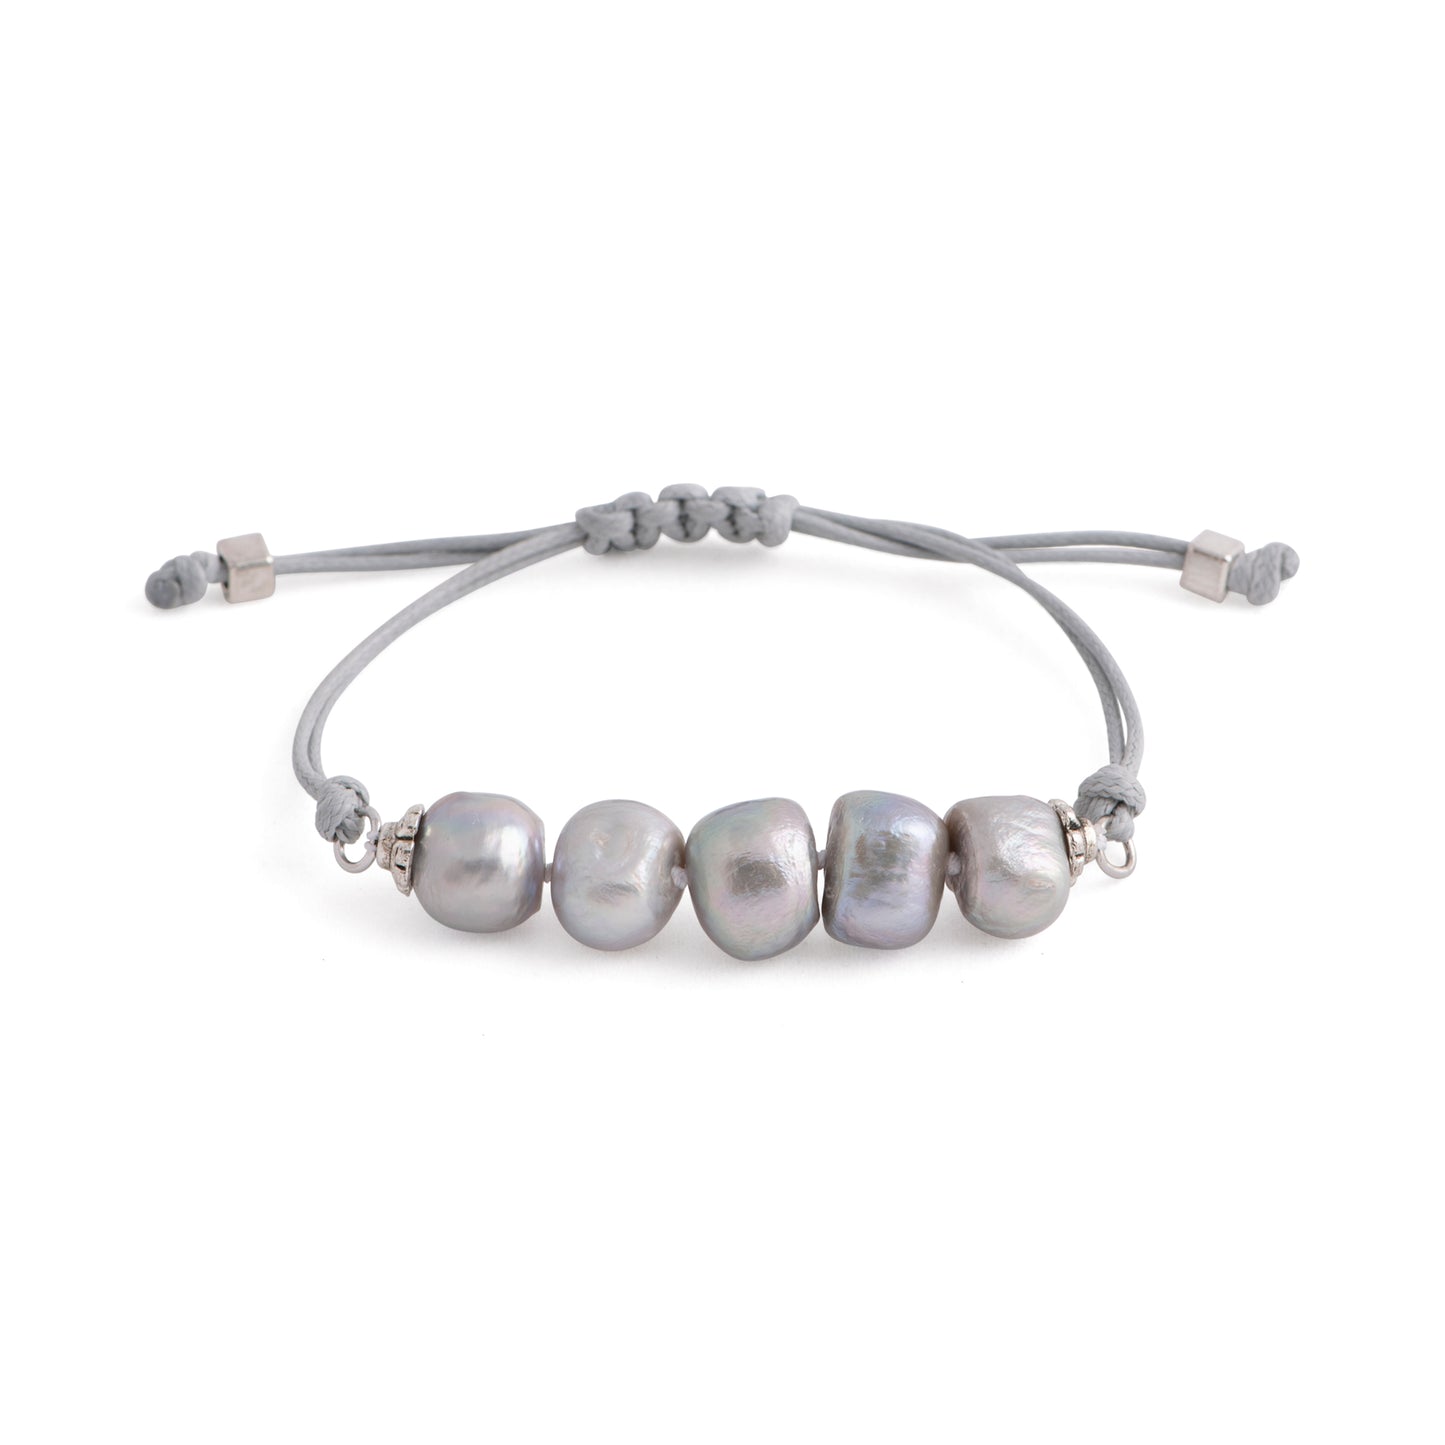 Aegean - Five freshwater pearl adjustable string bracelet (Grey strand, silver pearls)